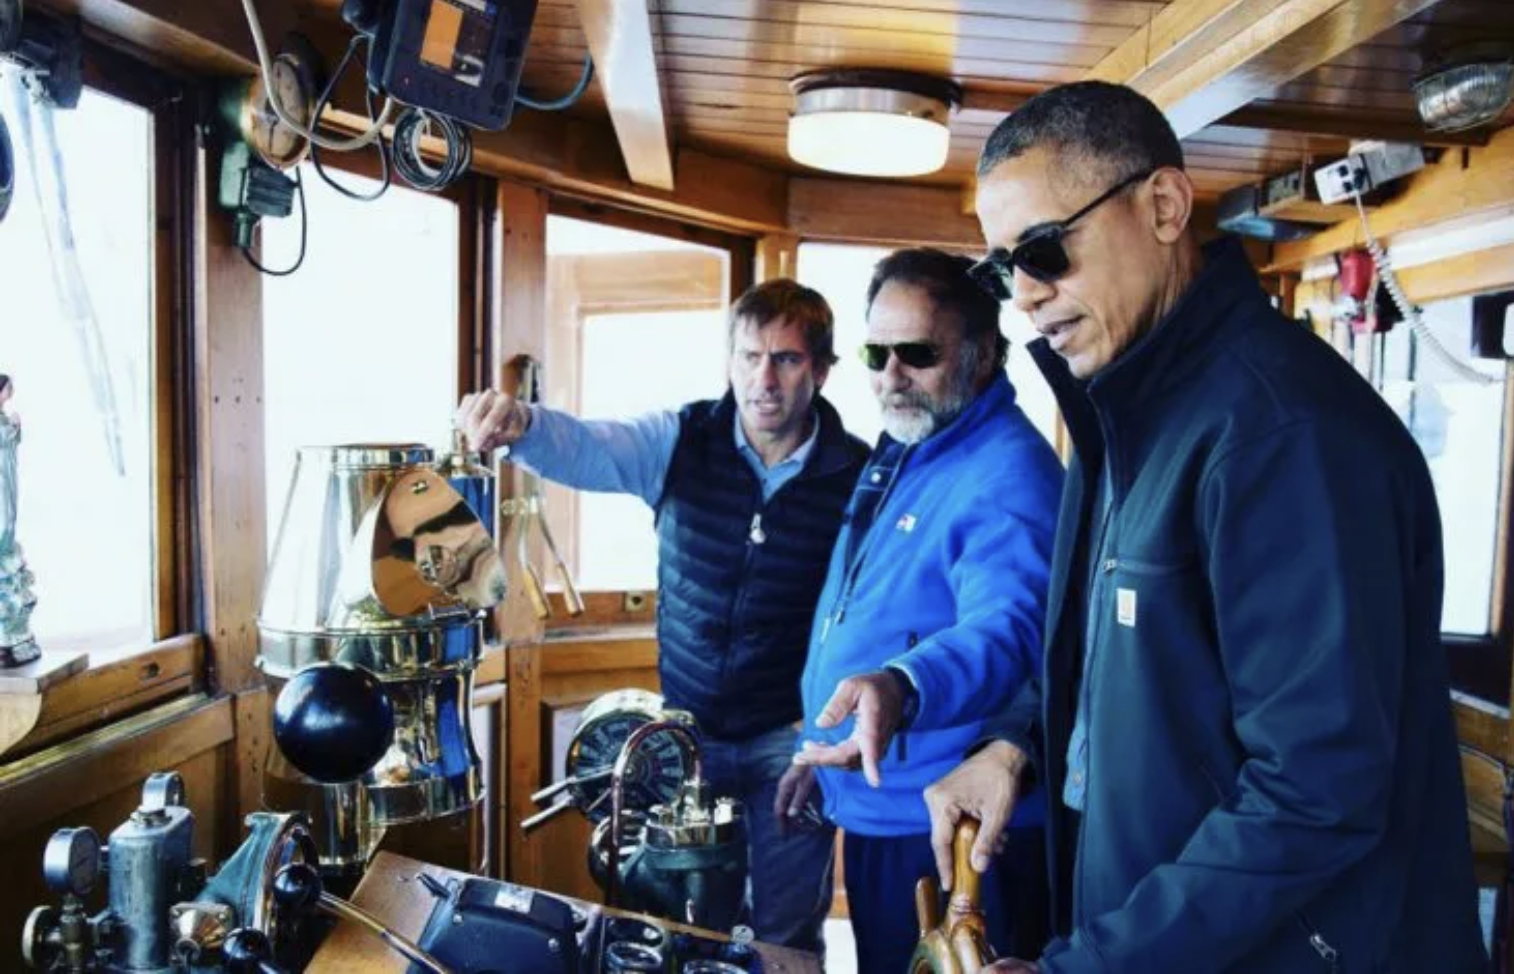 Barack Obama onboard Modesta Victoria, Bariloche, Argentina